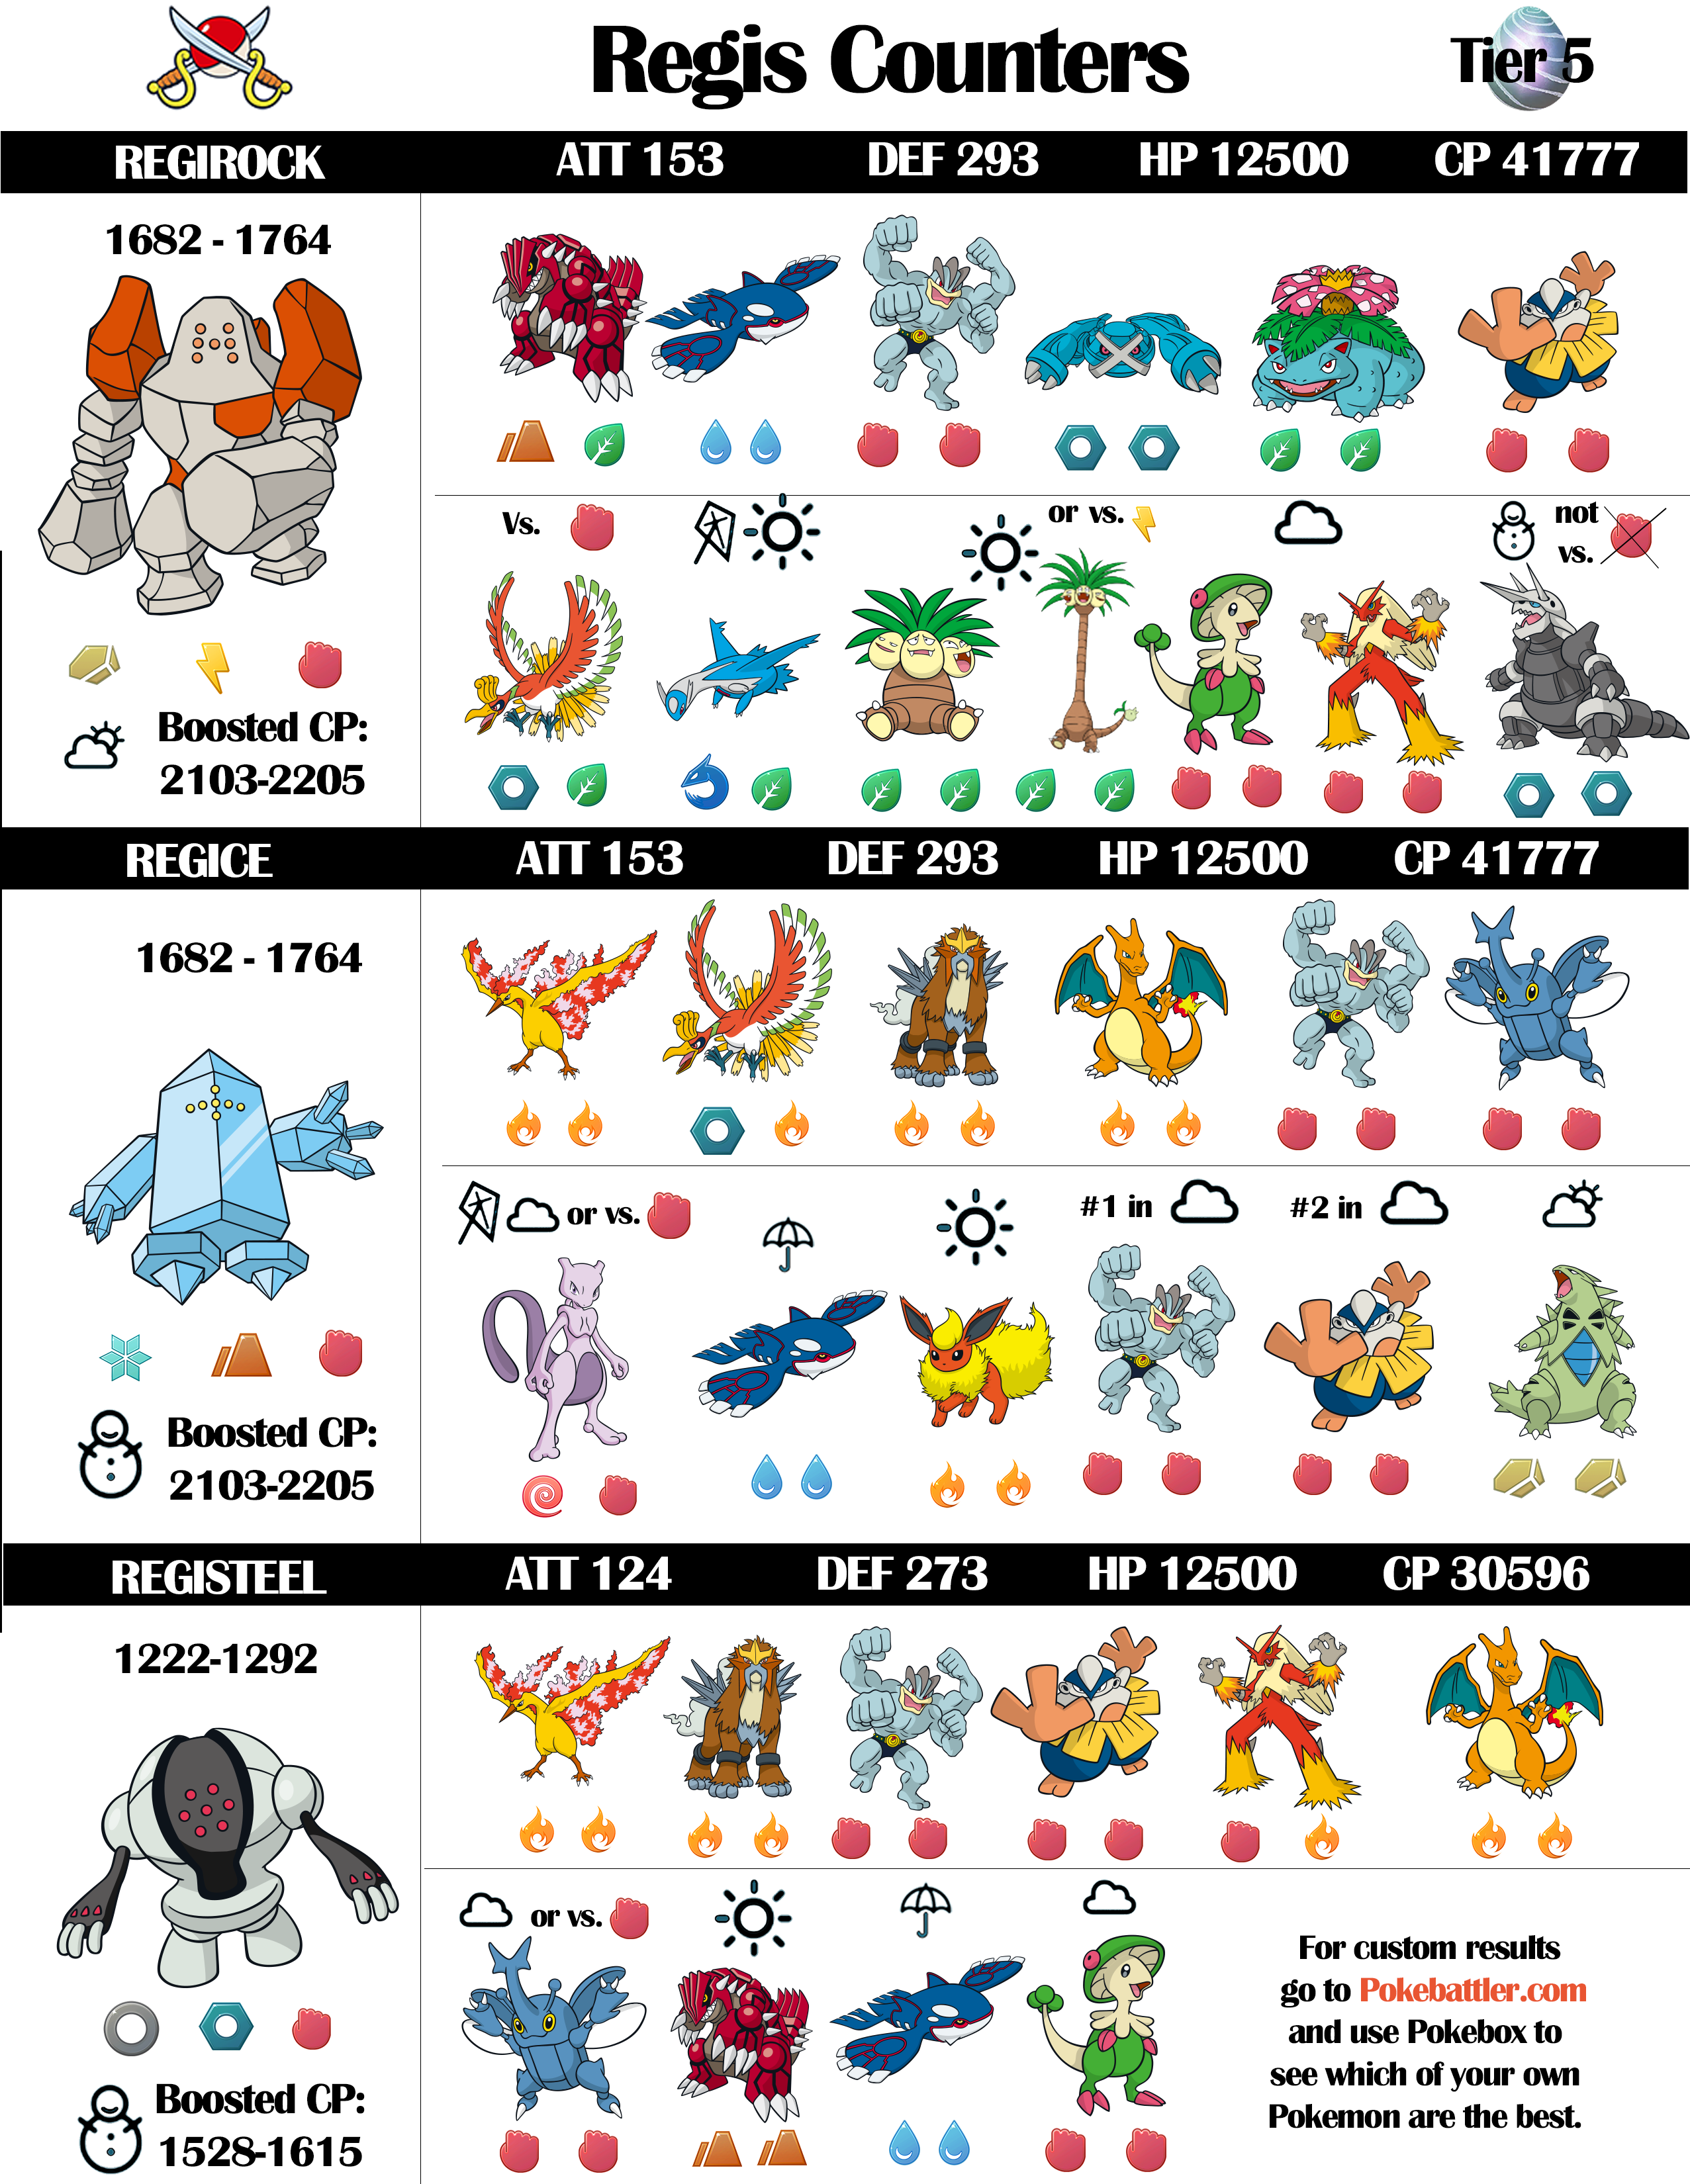 Pokemon Go Regigigas Raid guide: Weaknesses & best counters